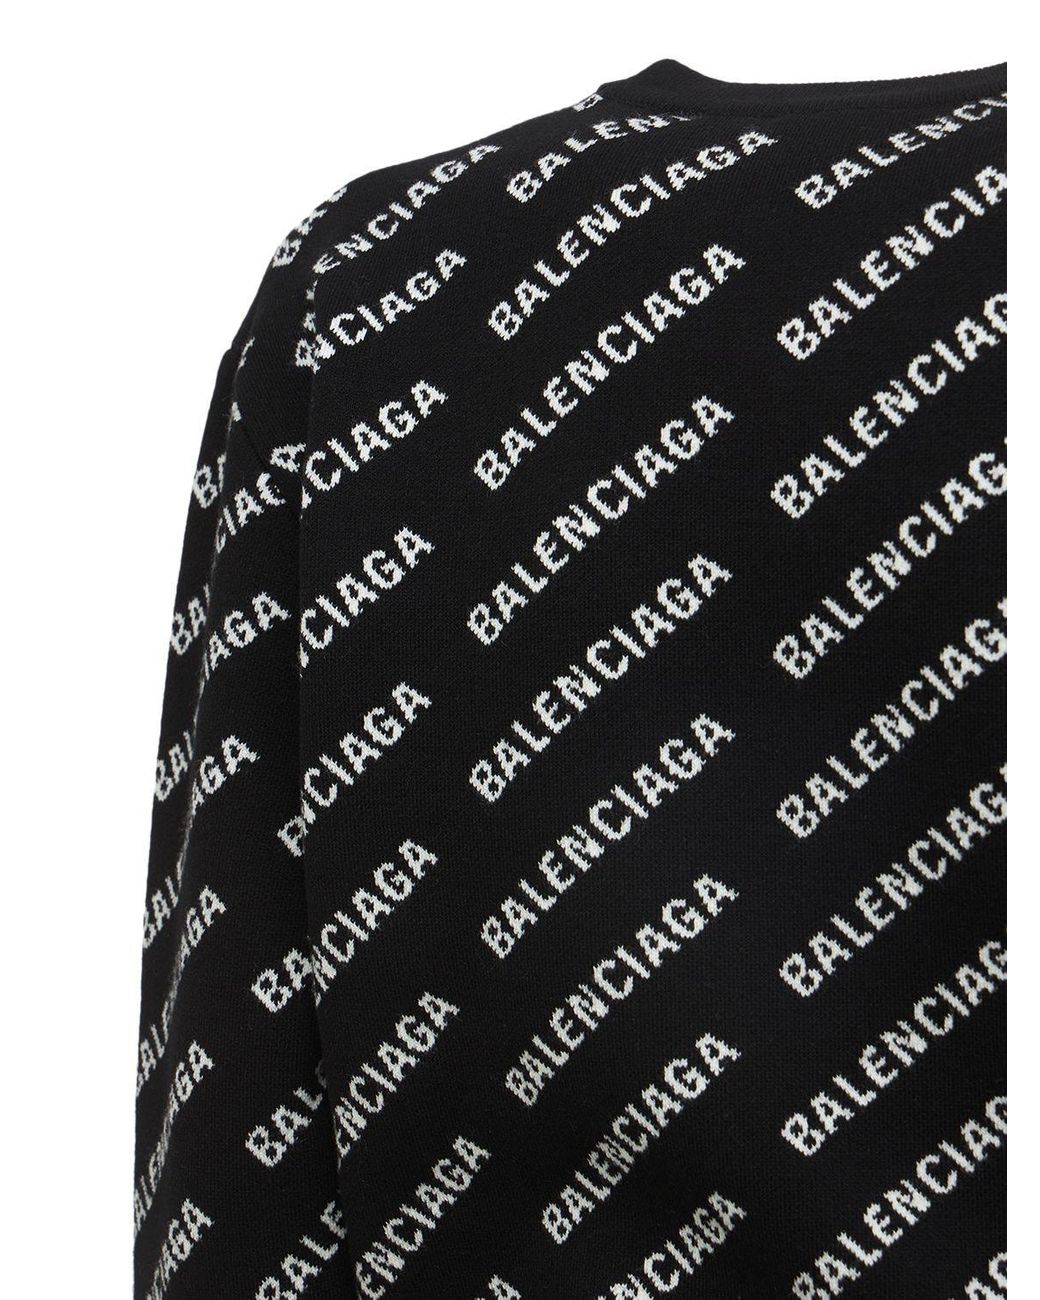 Balenciaga All Over Mini Logo Cotton Blend Sweater in Black/White (Black) -  Save 7% | Lyst